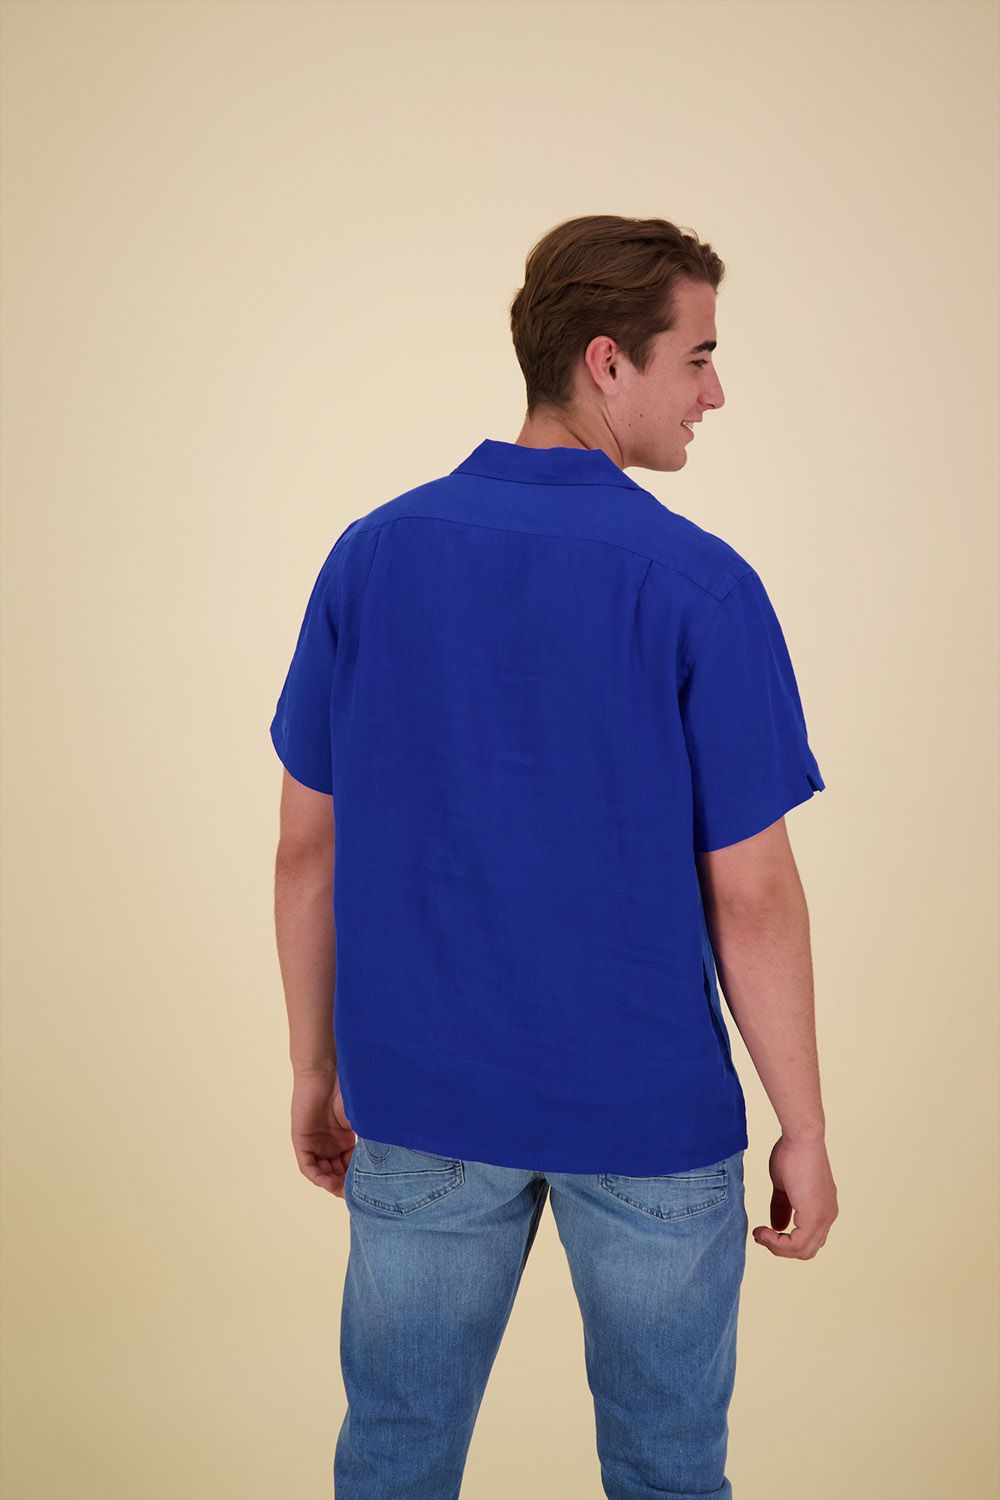 Polo Ralph Lauren Overhemd Classic Blauw 